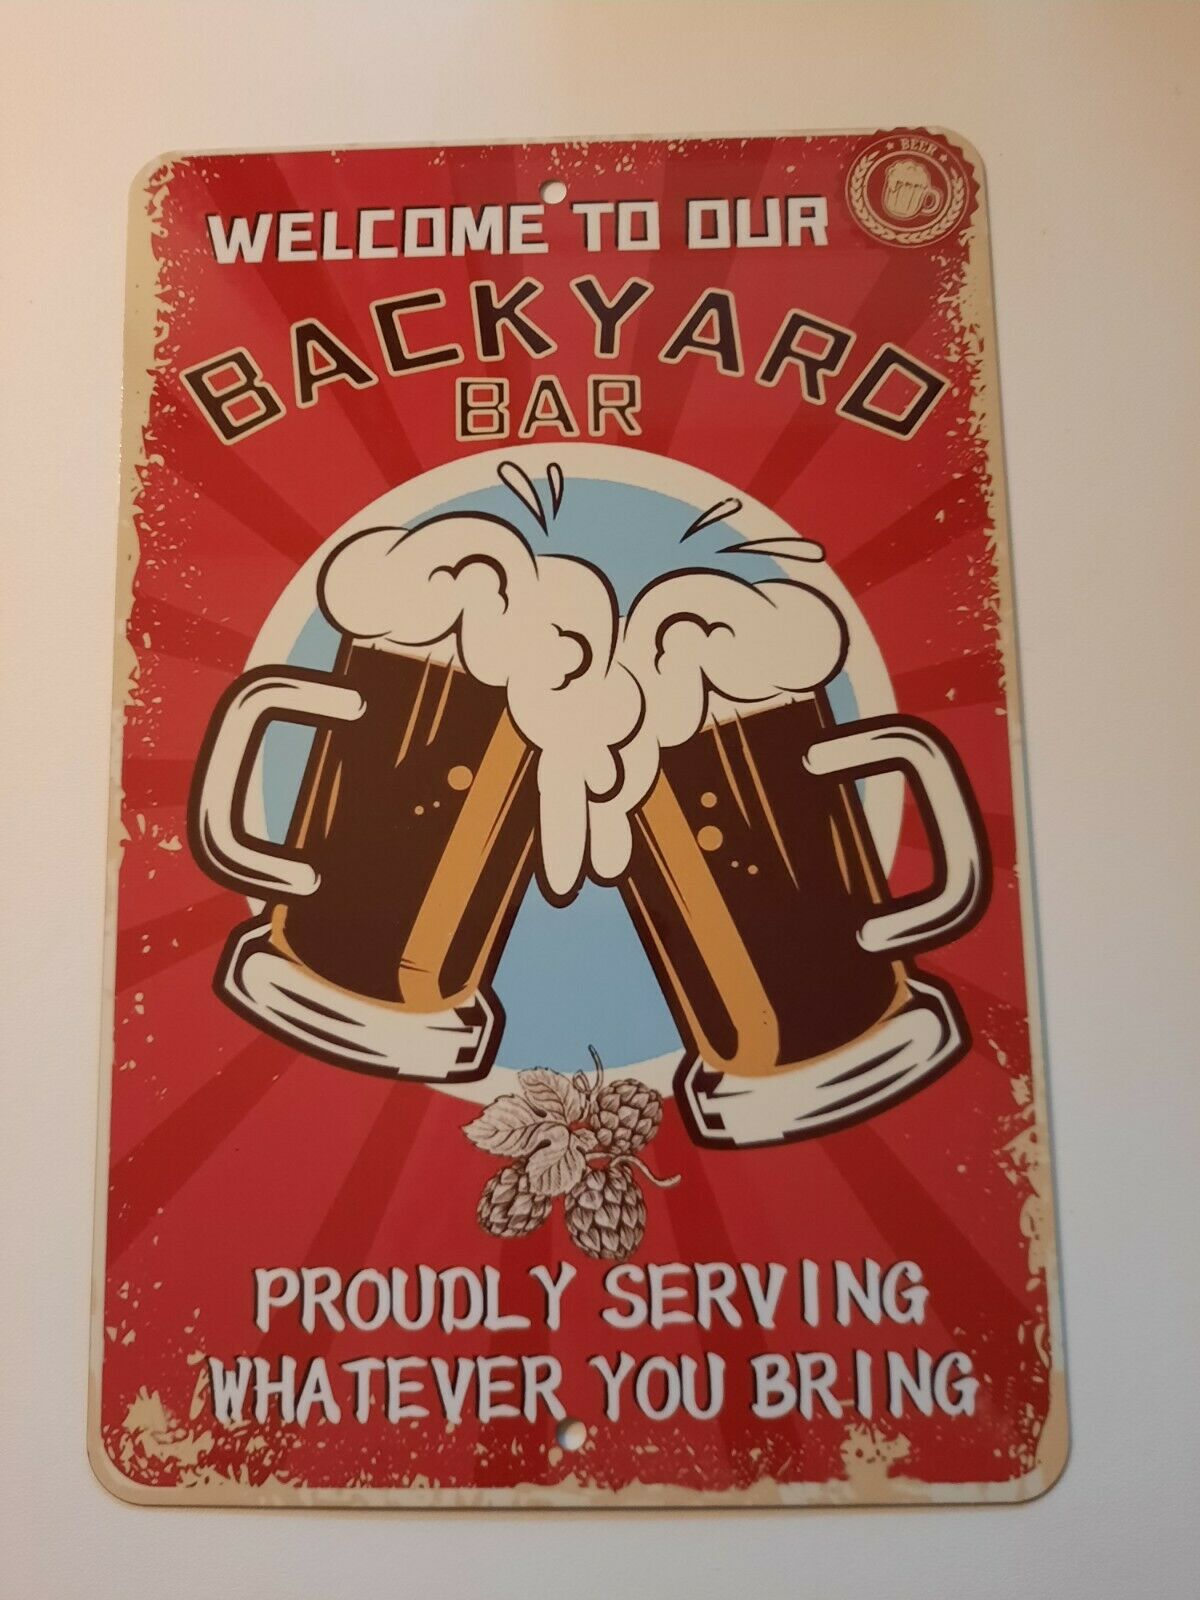 Welcome to Our Backyard Bar 8x12 Metal Wall Bar Sign